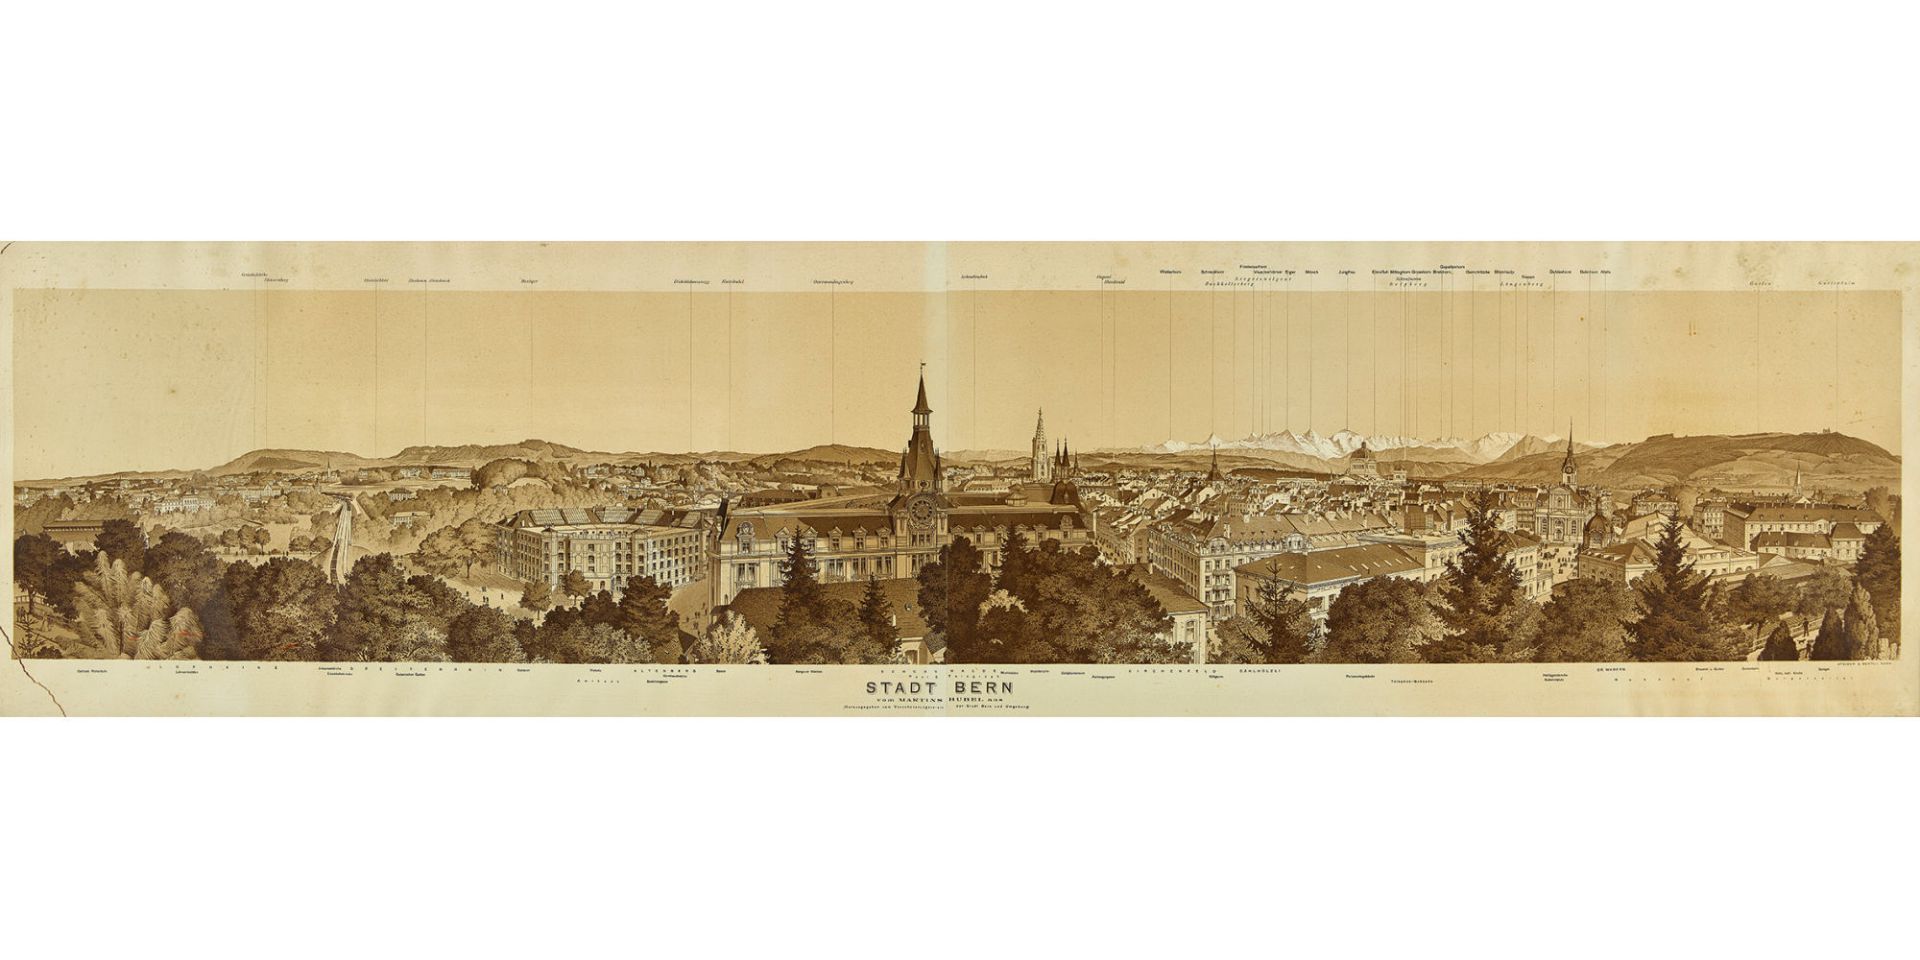 SCHWEIZ, 20. JH.: Panorama der Stadt Bern.